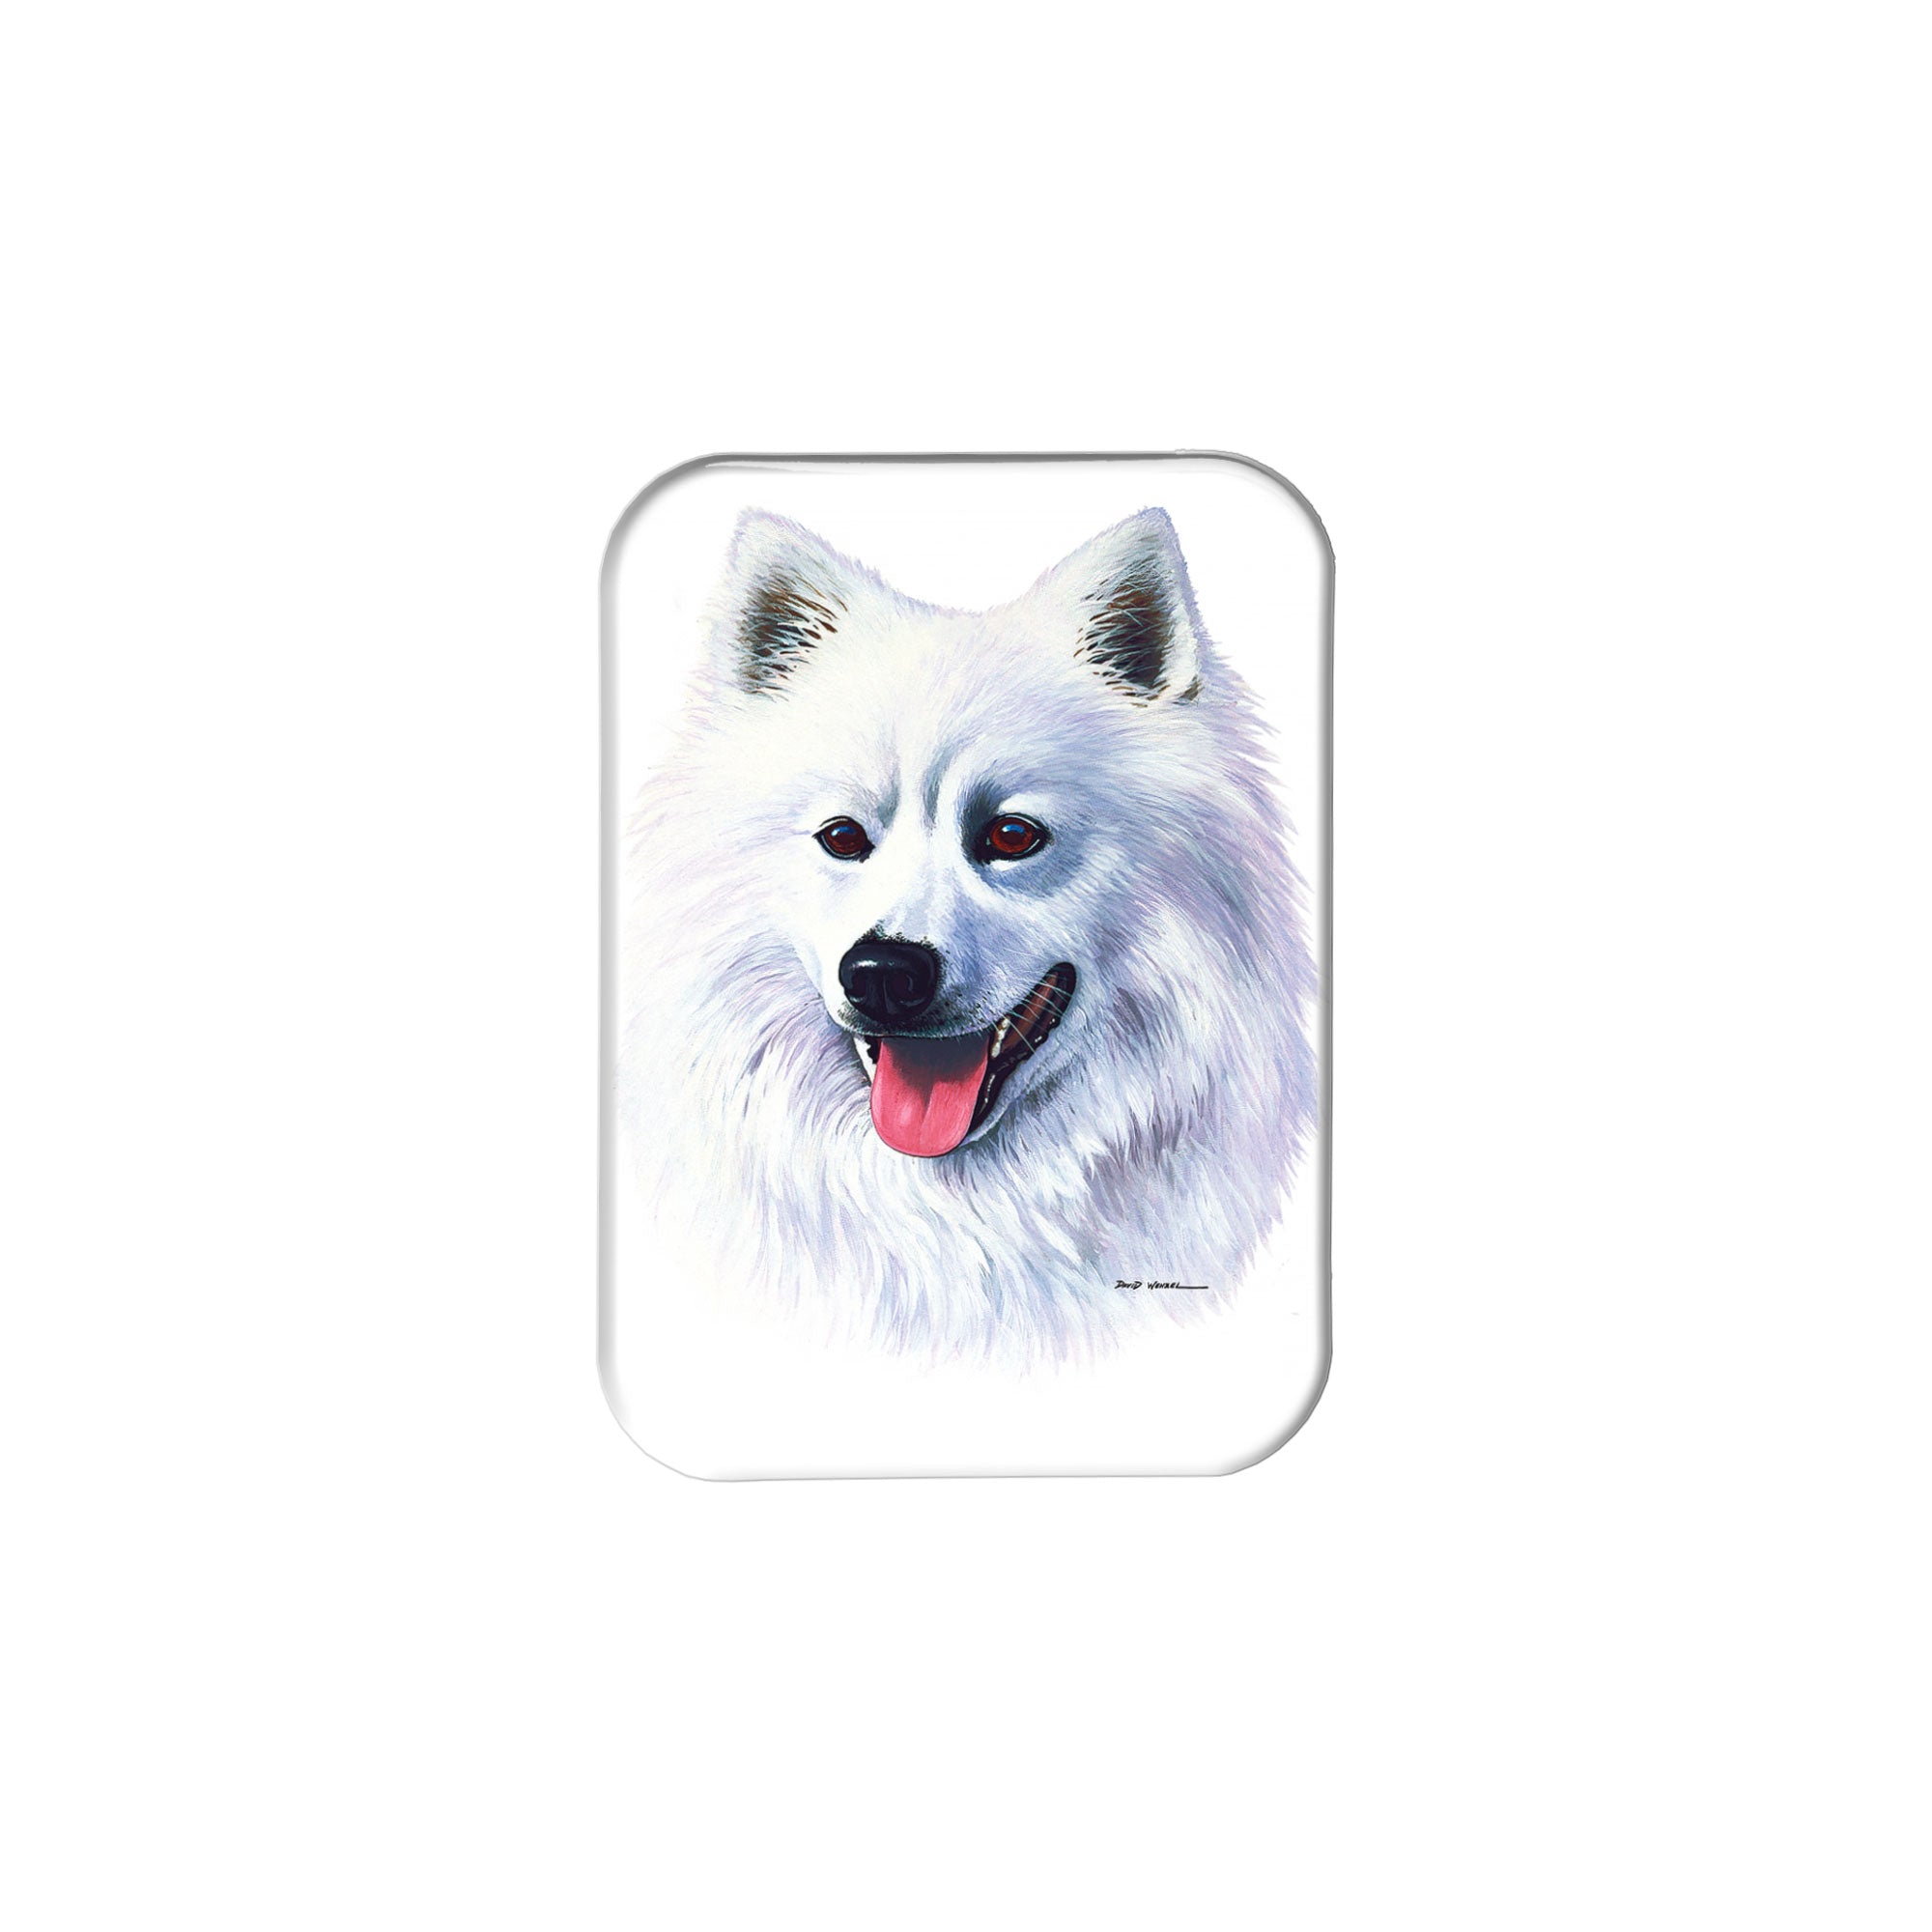 "American Eskimo Dog" - 2.5" X 3.5" Rectangle Fridge Magnets